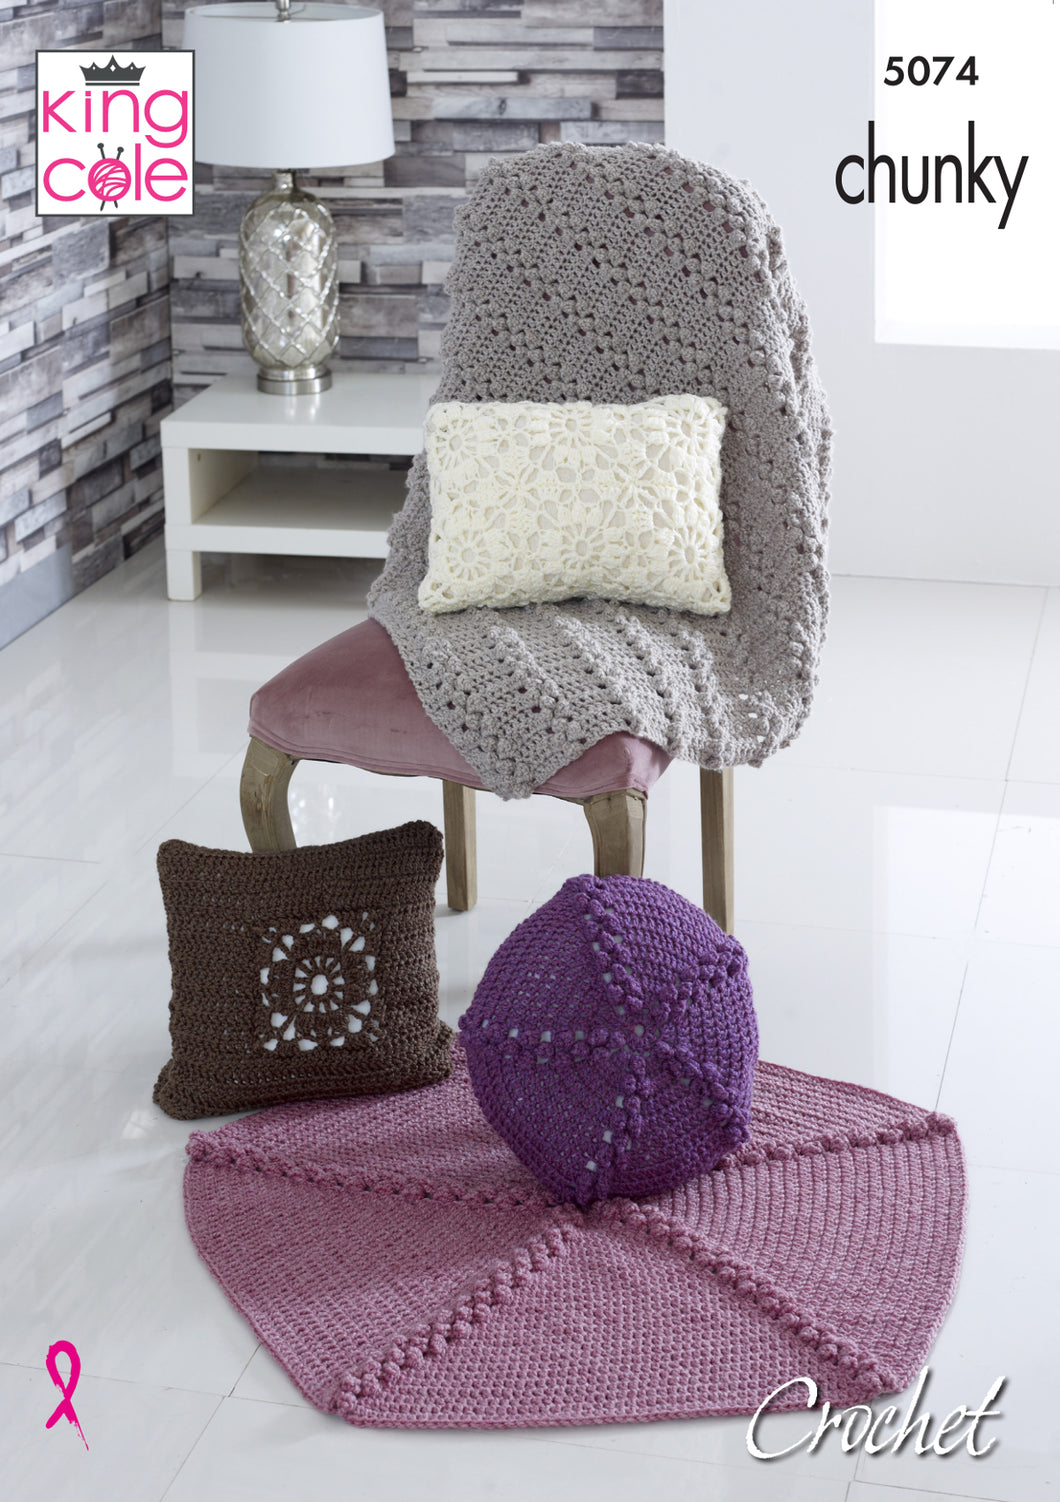 King Cole Chunky Crochet Pattern - Cushions & Throws (5074)